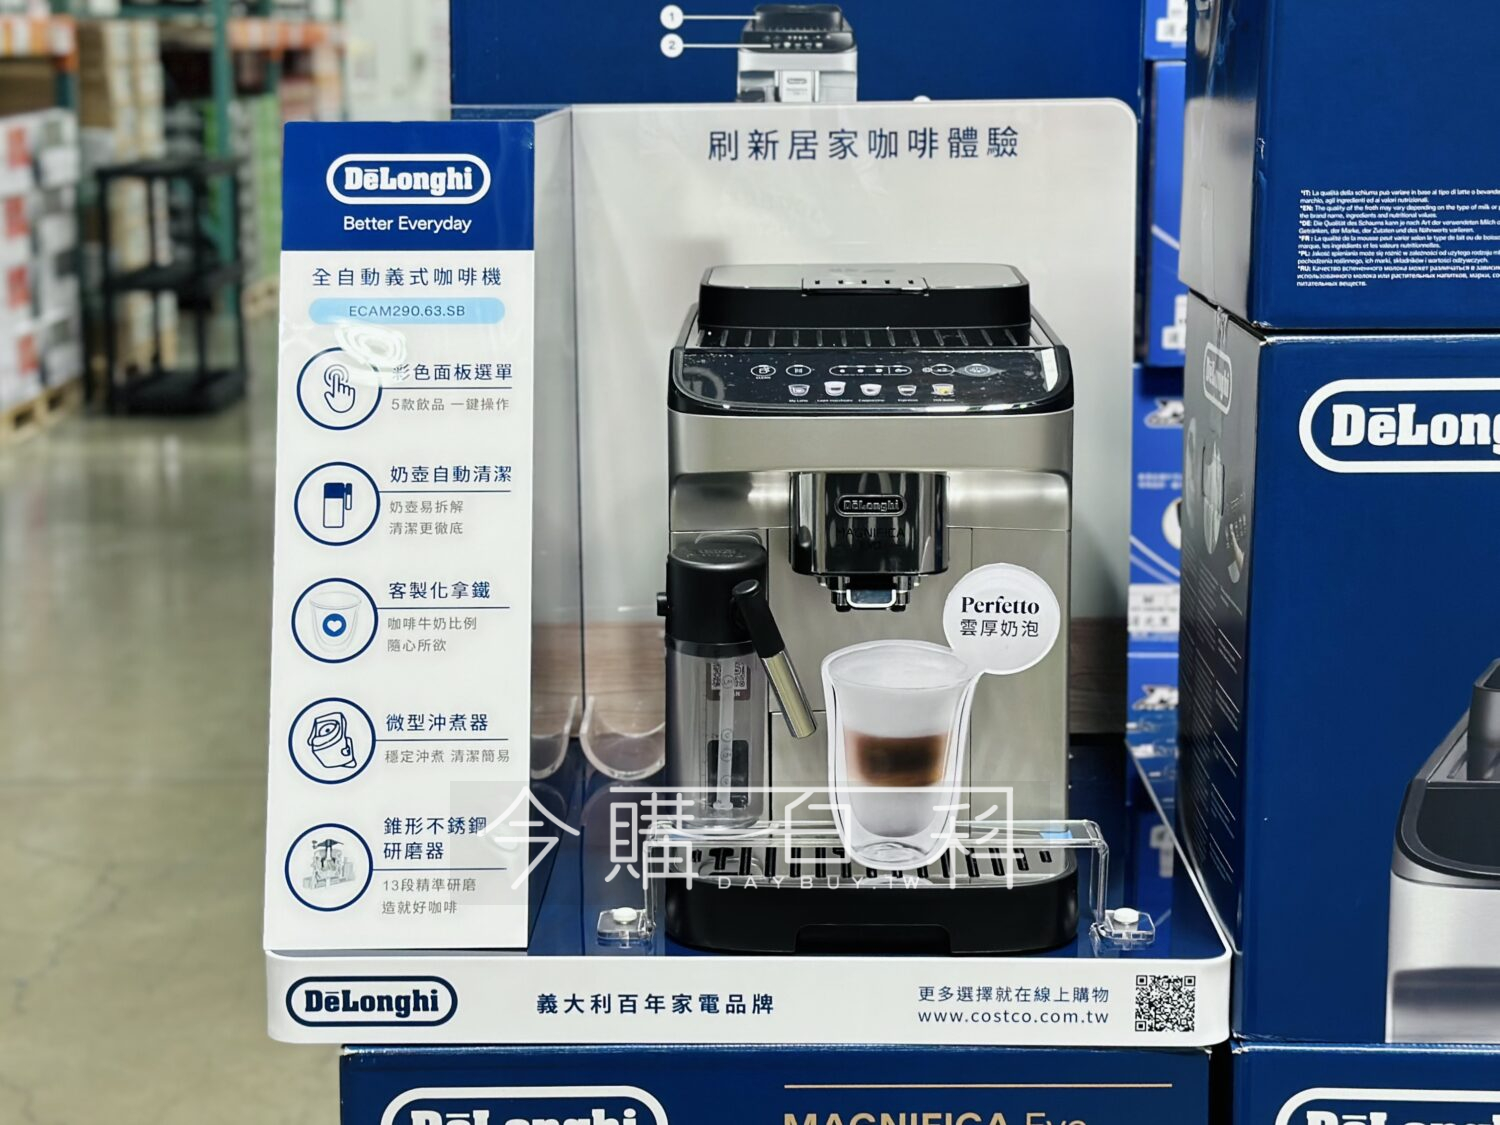 DELONGHI 液晶螢幕全自動義式咖啡機 #144032